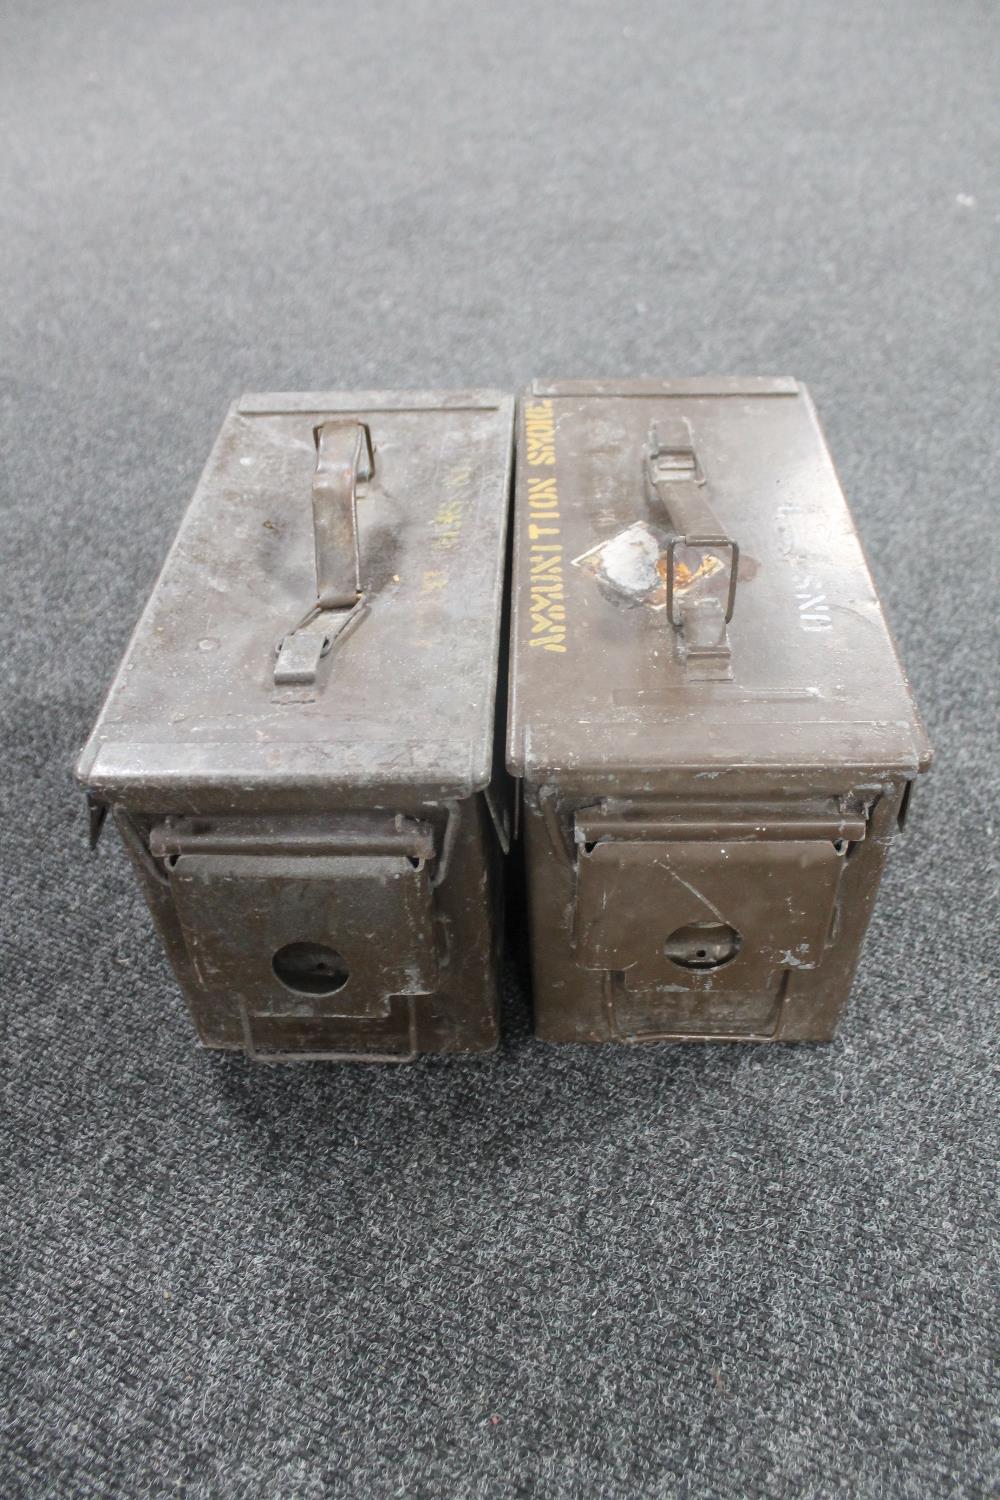 Two ammunition boxes